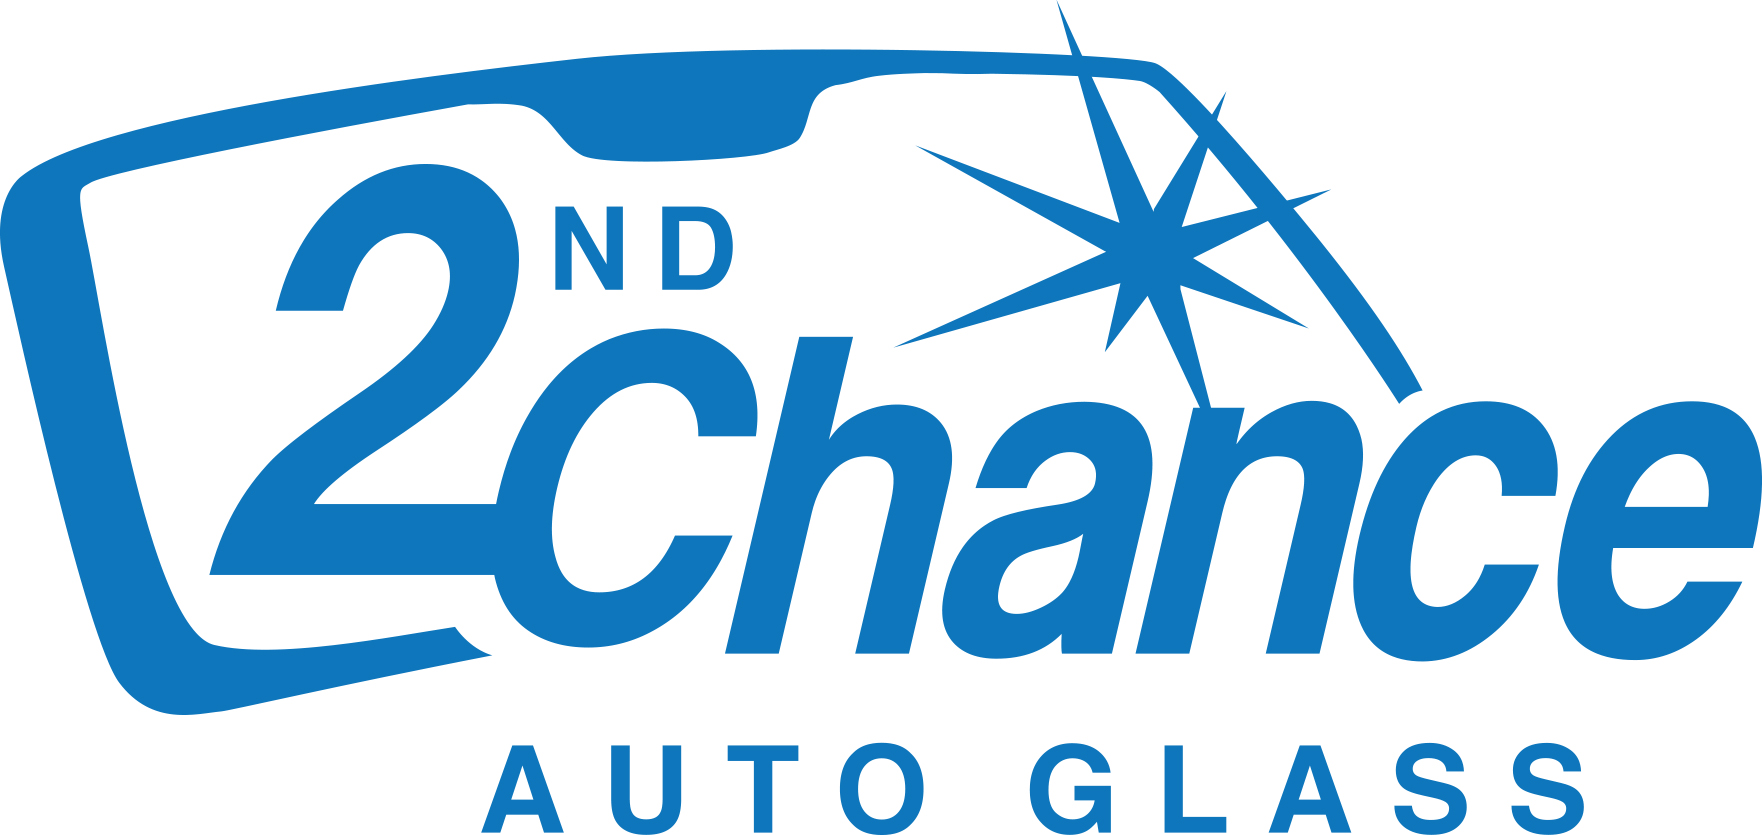 2nd Chance Auto Glass Logo Blue